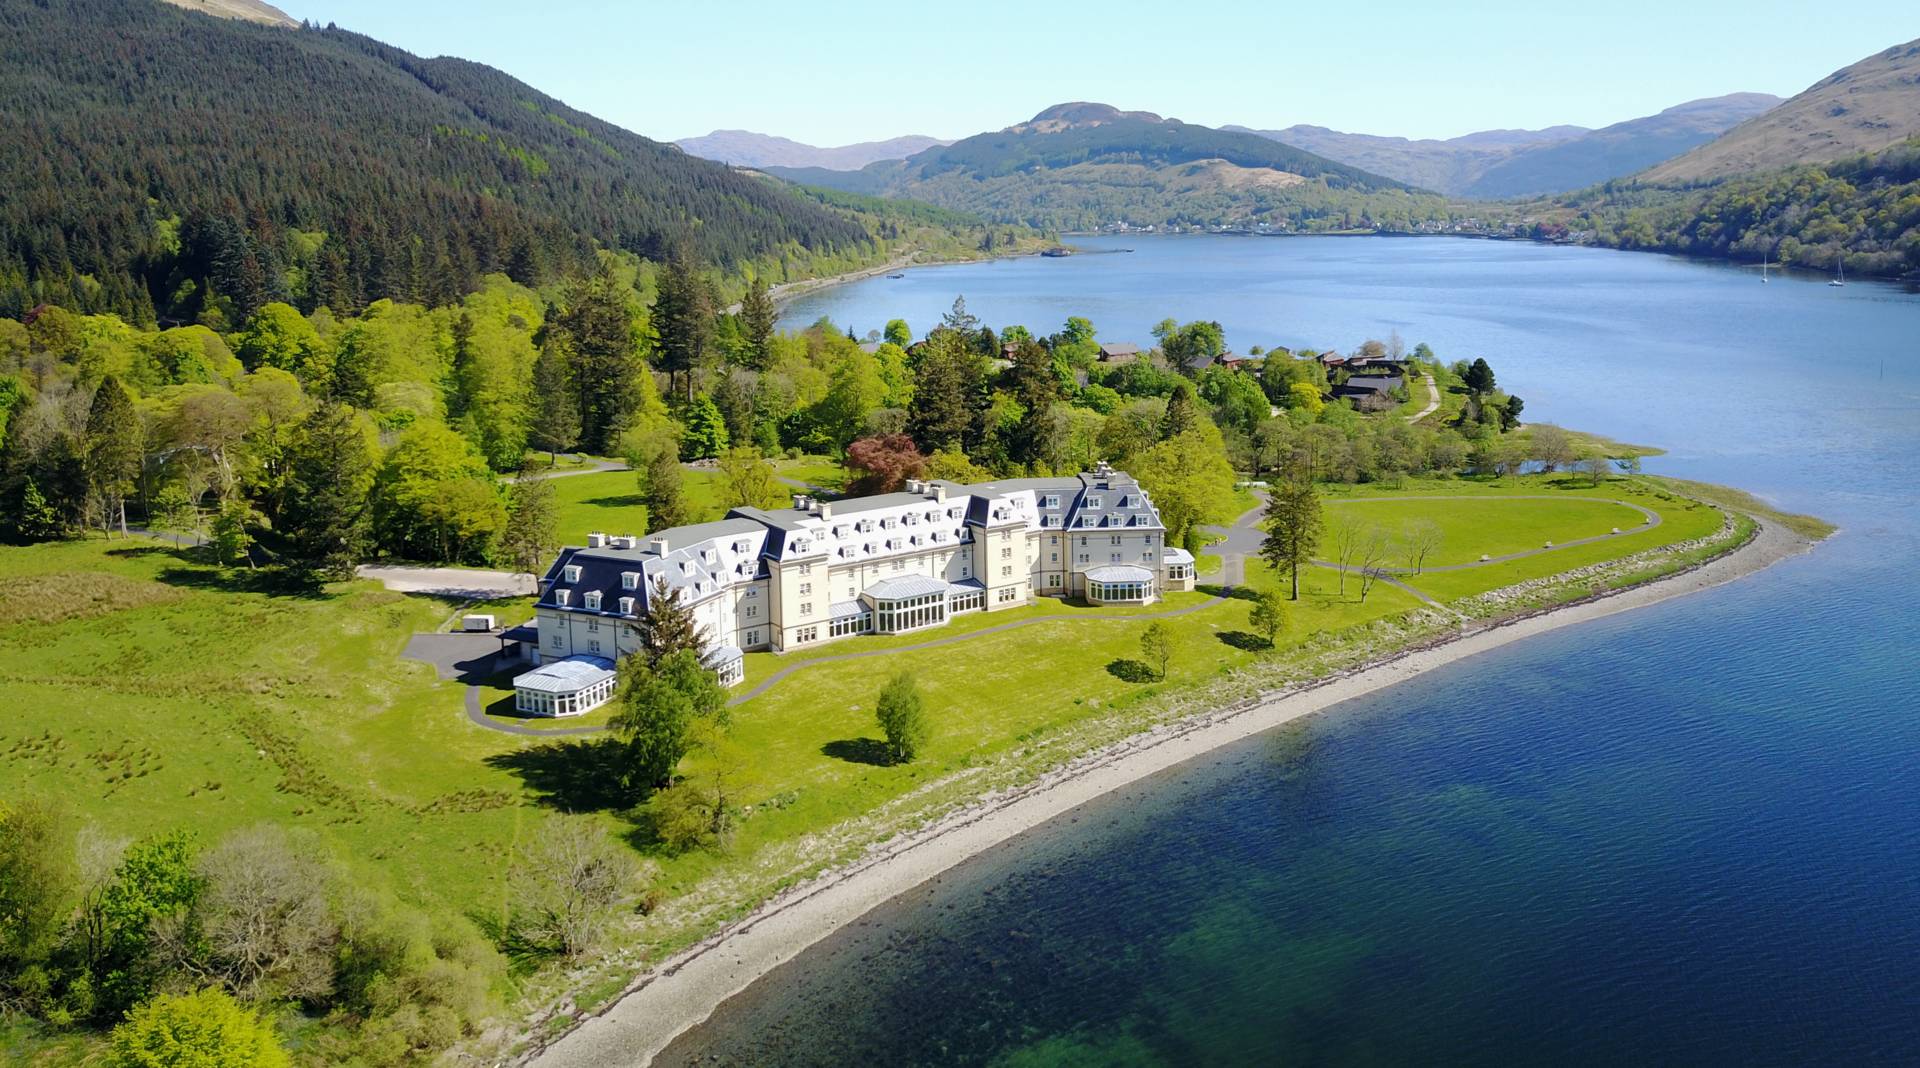 Stay at Ardgartan Hotel on a Self-drive break with Lochs & Glens